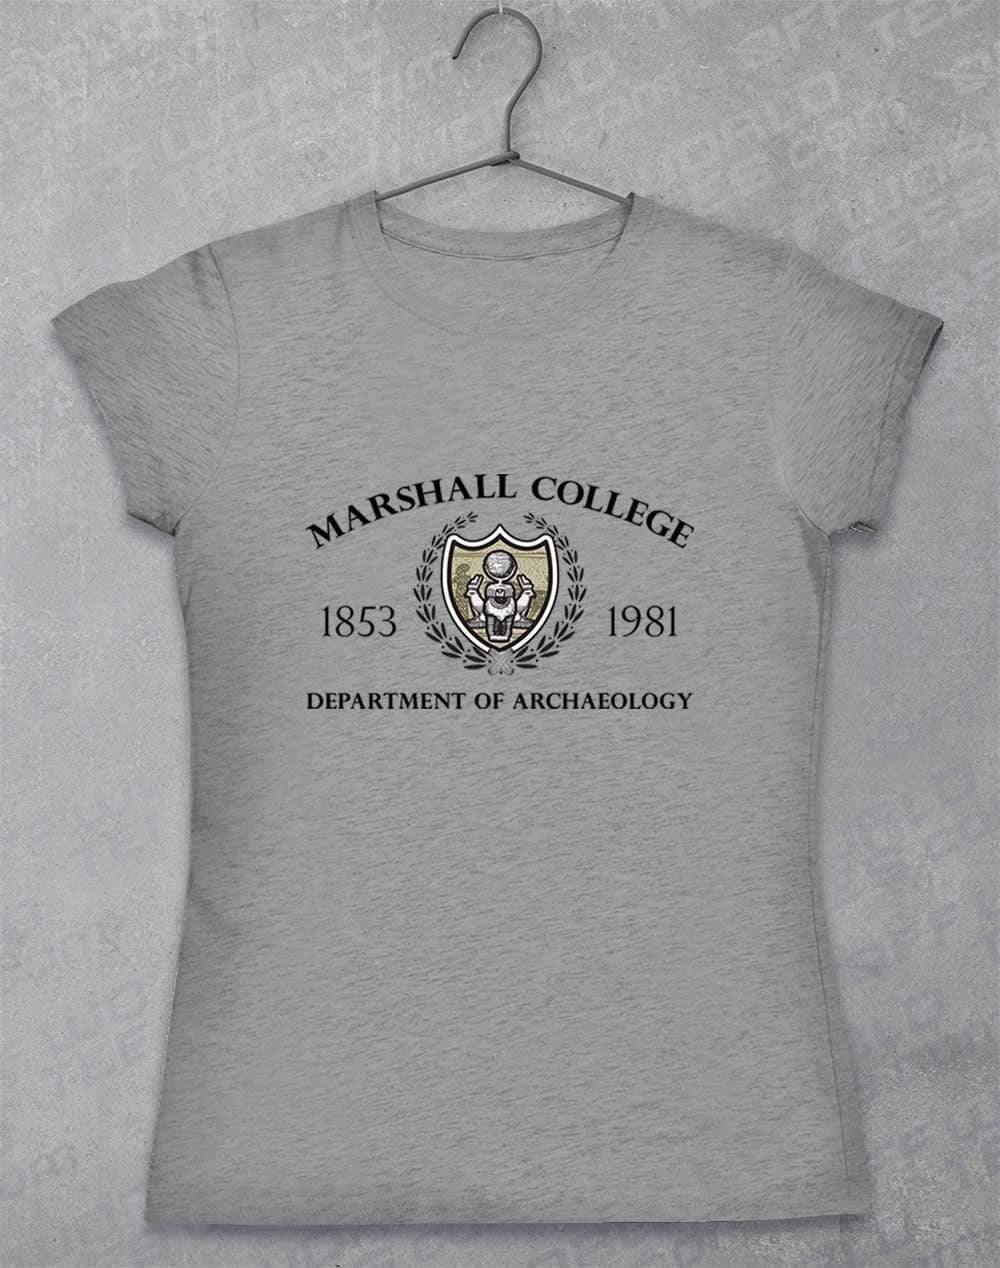 Marshall College 1981 Women's T-Shirt 8-10 / Sport Grey  - Off World Tees